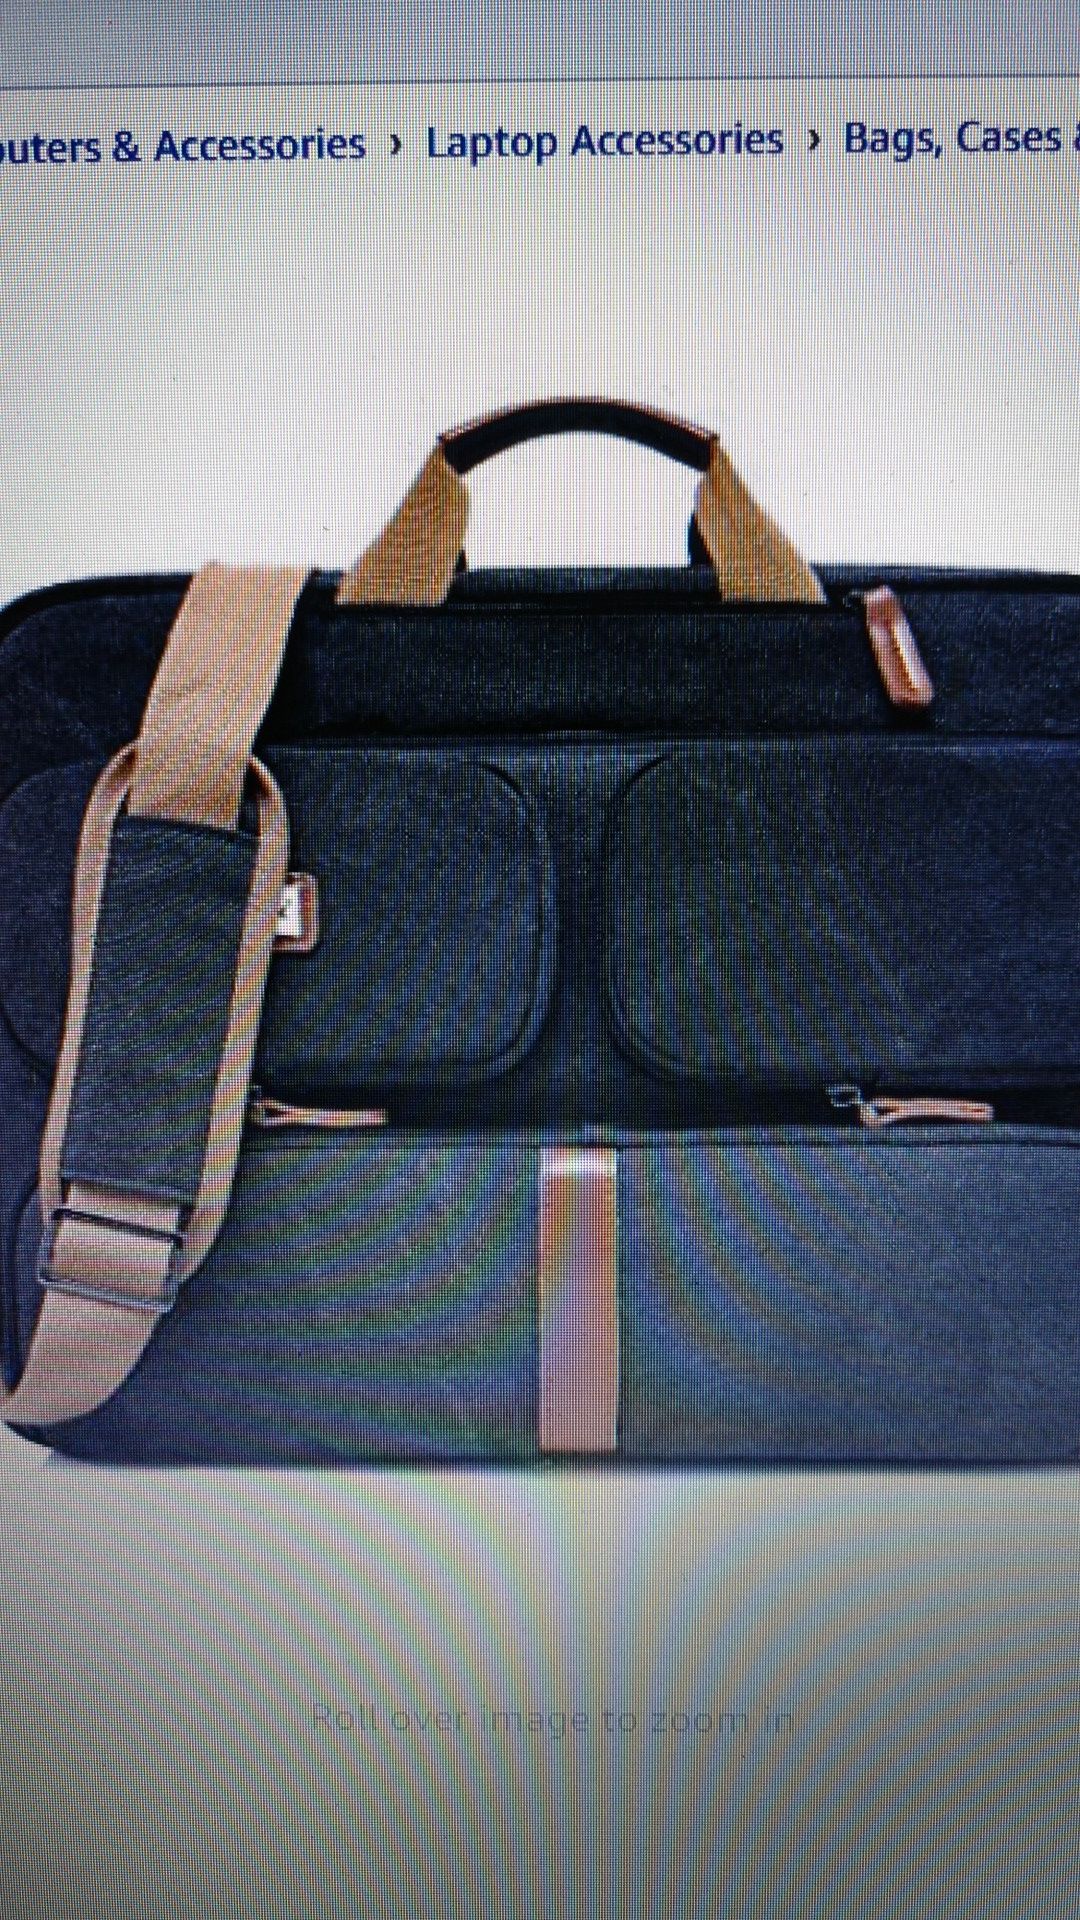 New Coolbell convertible padded laptop bag backpack messenger bag Canvas black